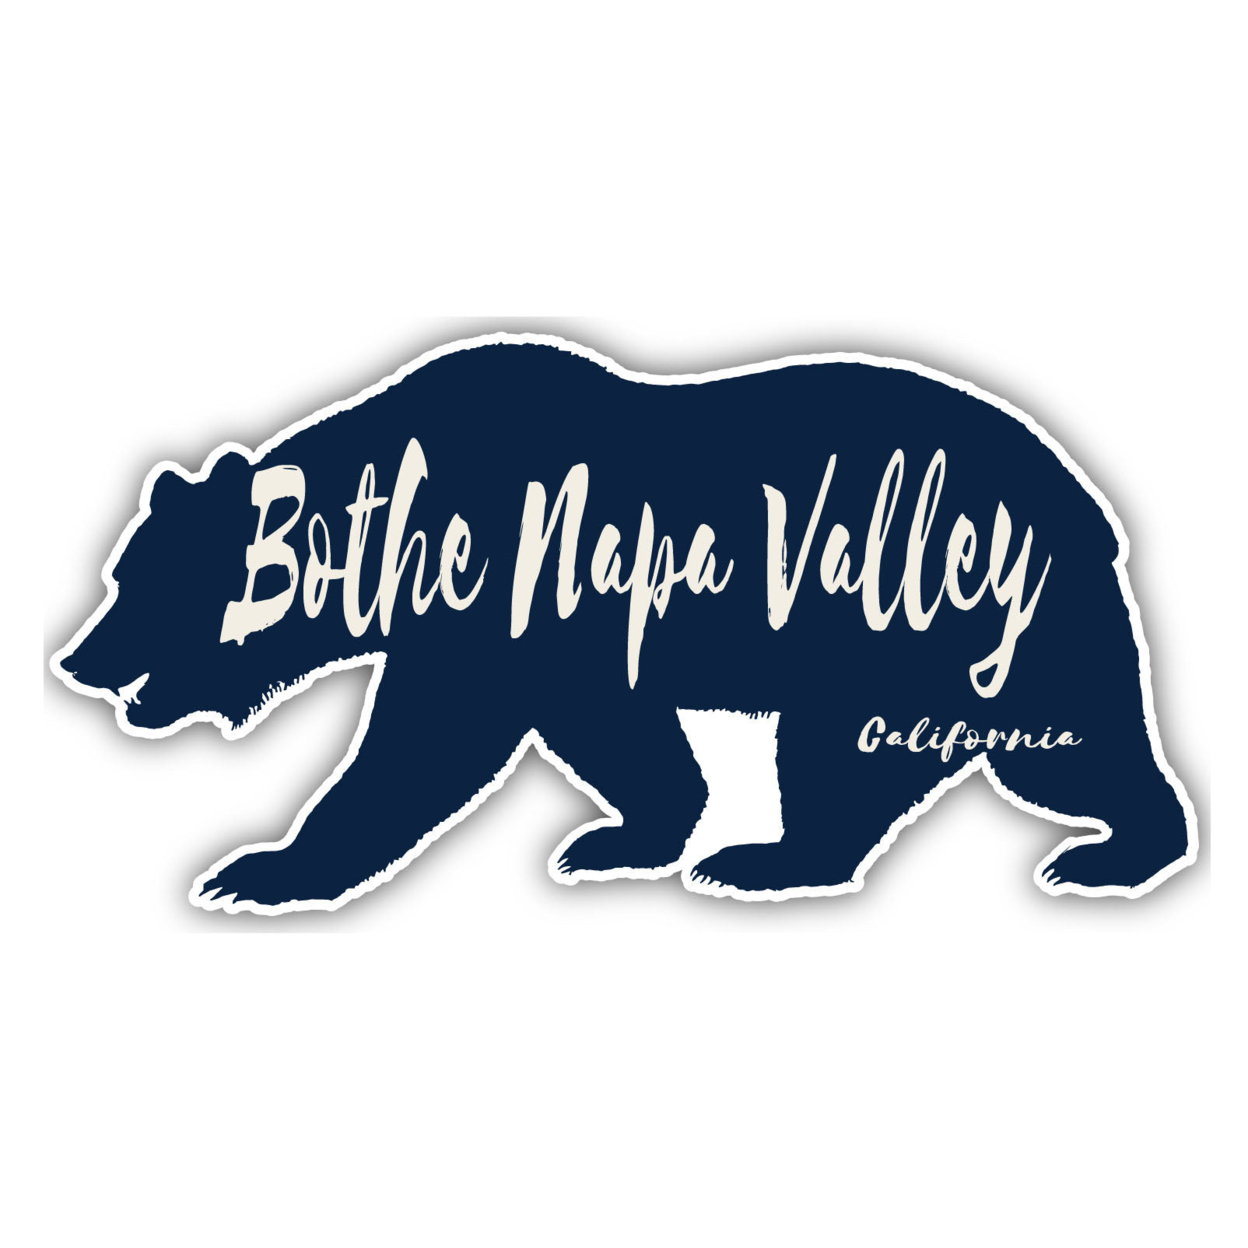 Bothe Napa Valley California Souvenir Decorative Stickers (Choose Theme And Size) - Single Unit, 12-Inch, Bear